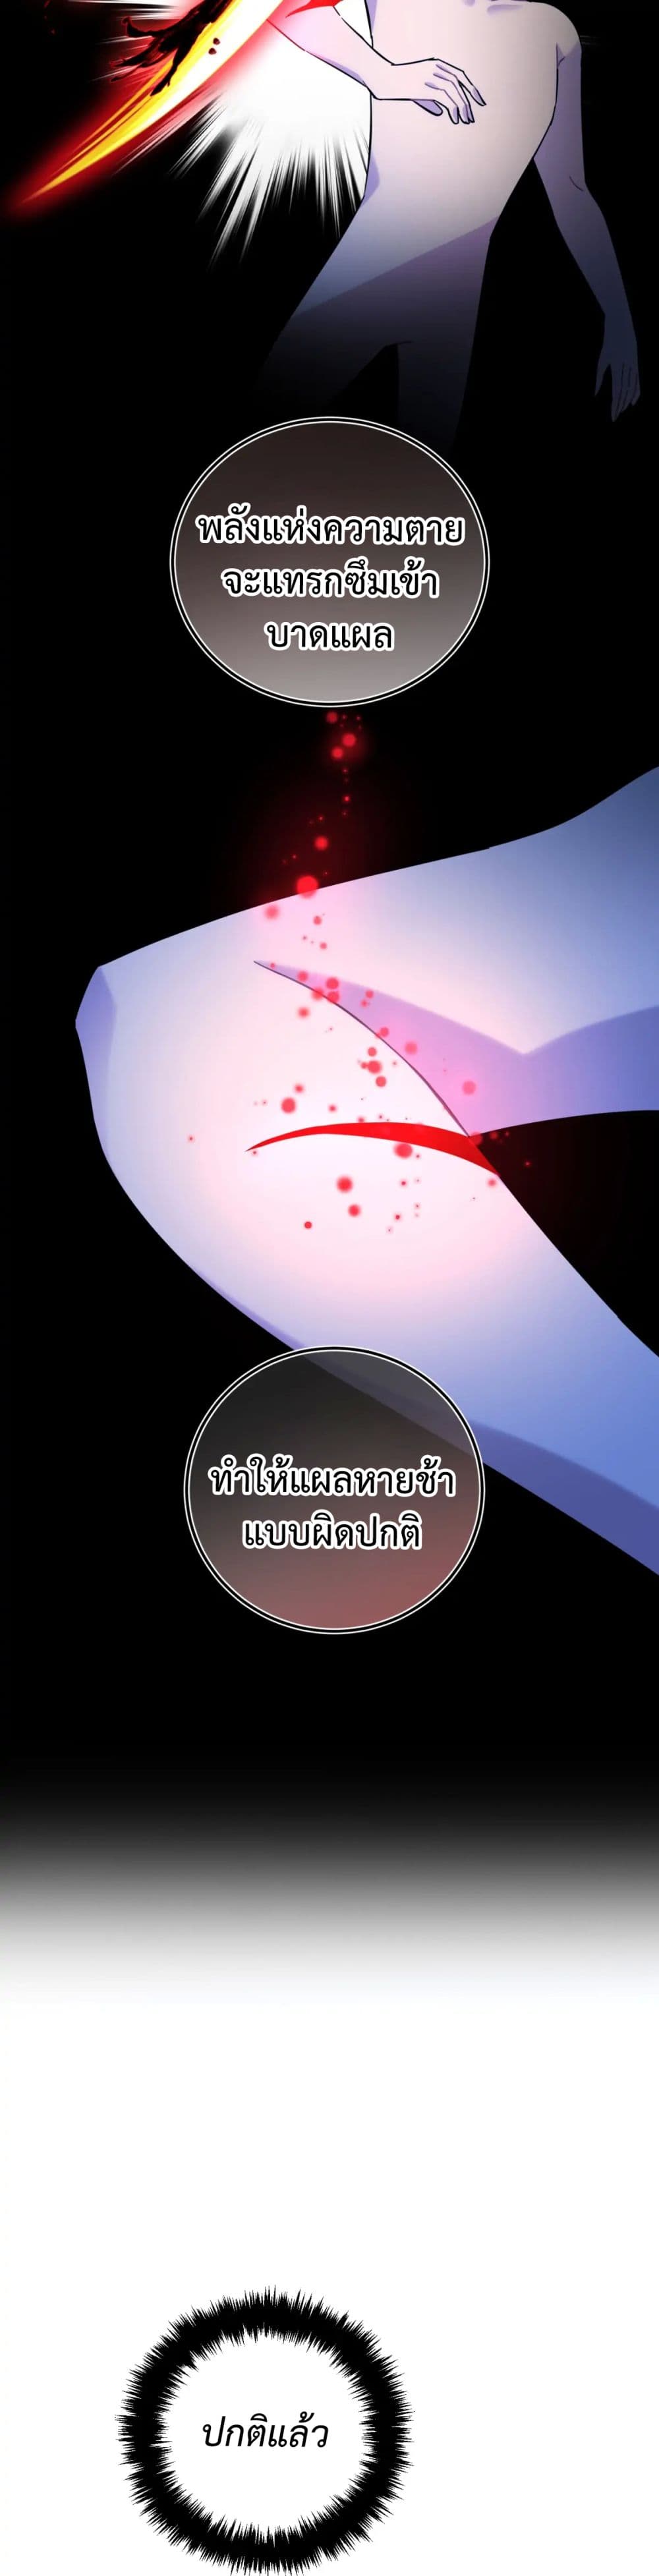 Anemone : Dead or Alive 11-11